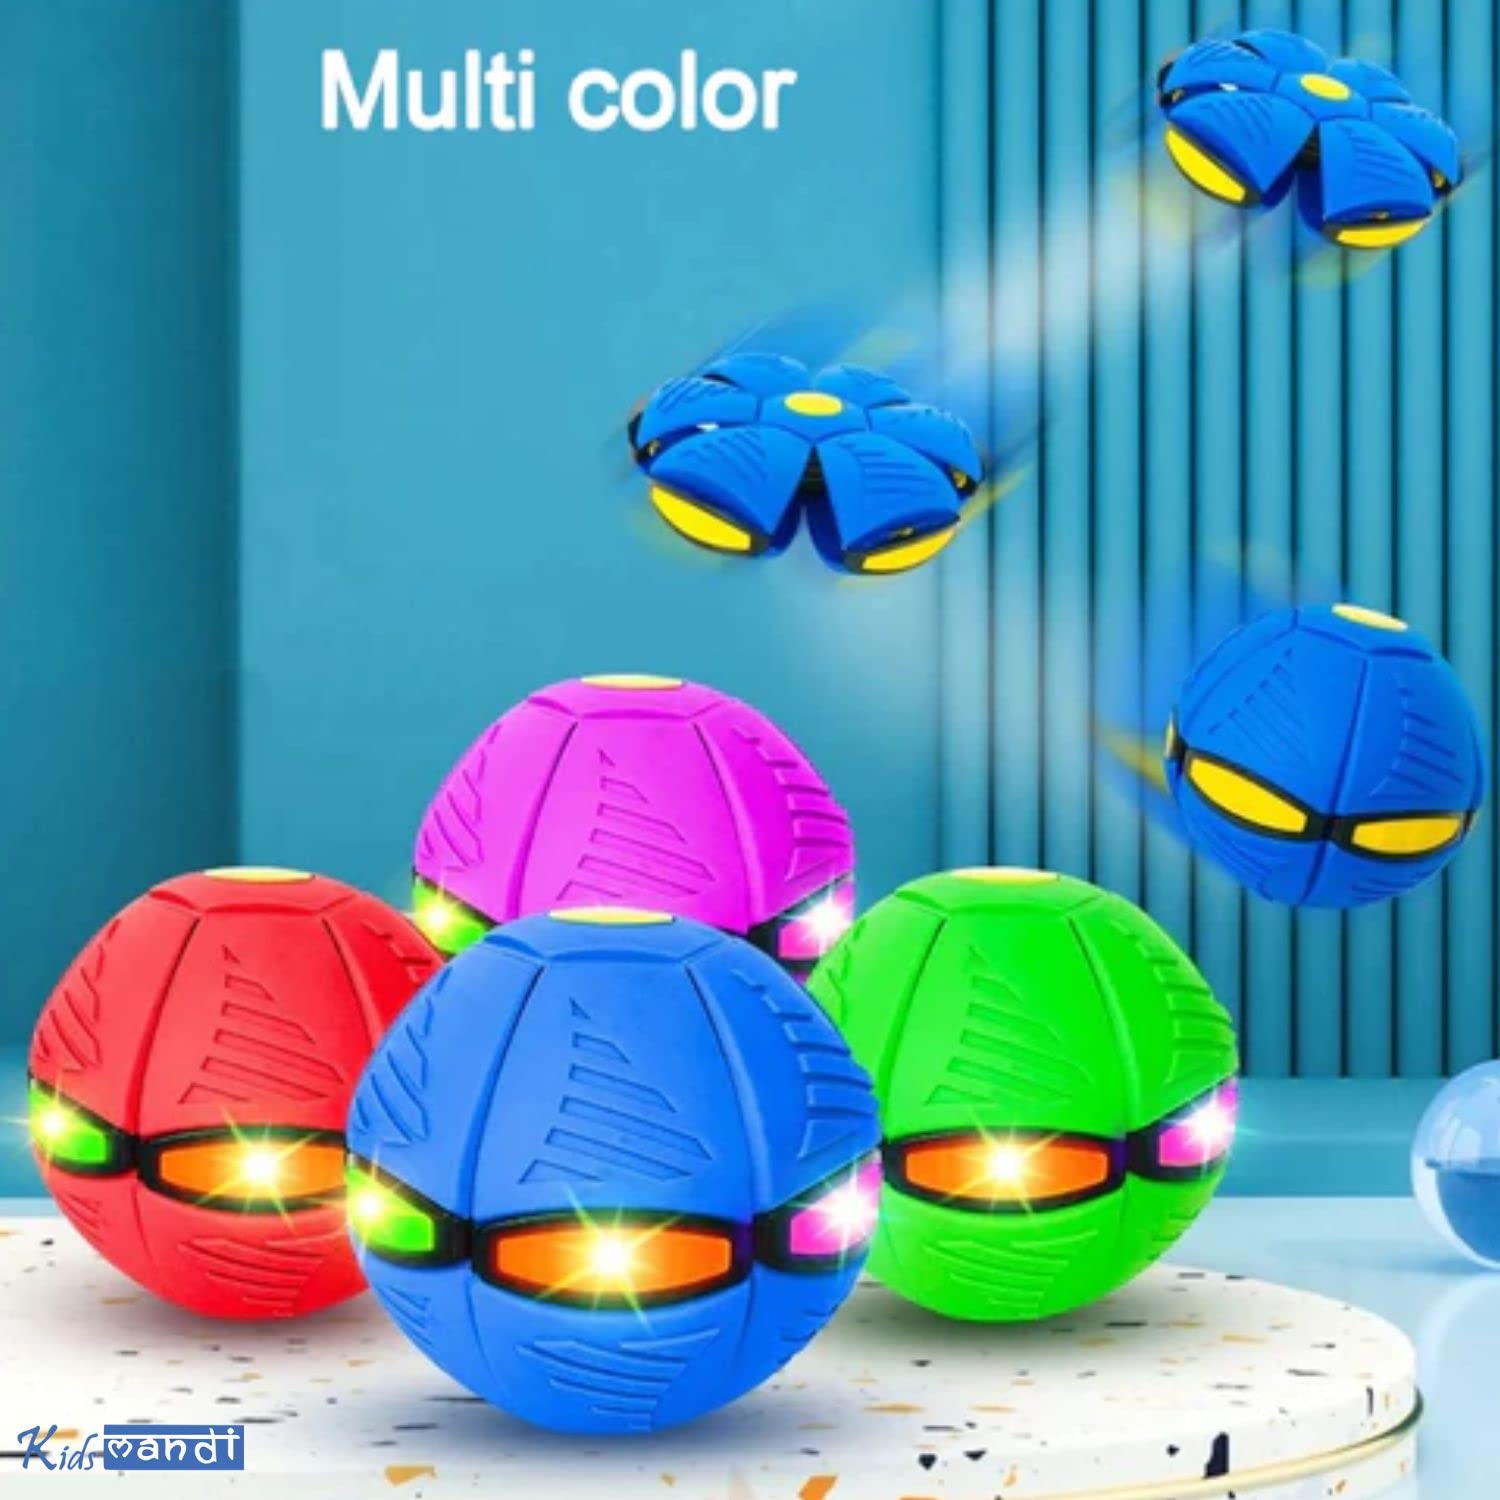 Kids Mandi UFO Magic Ball - Portable Flying Saucer Toy